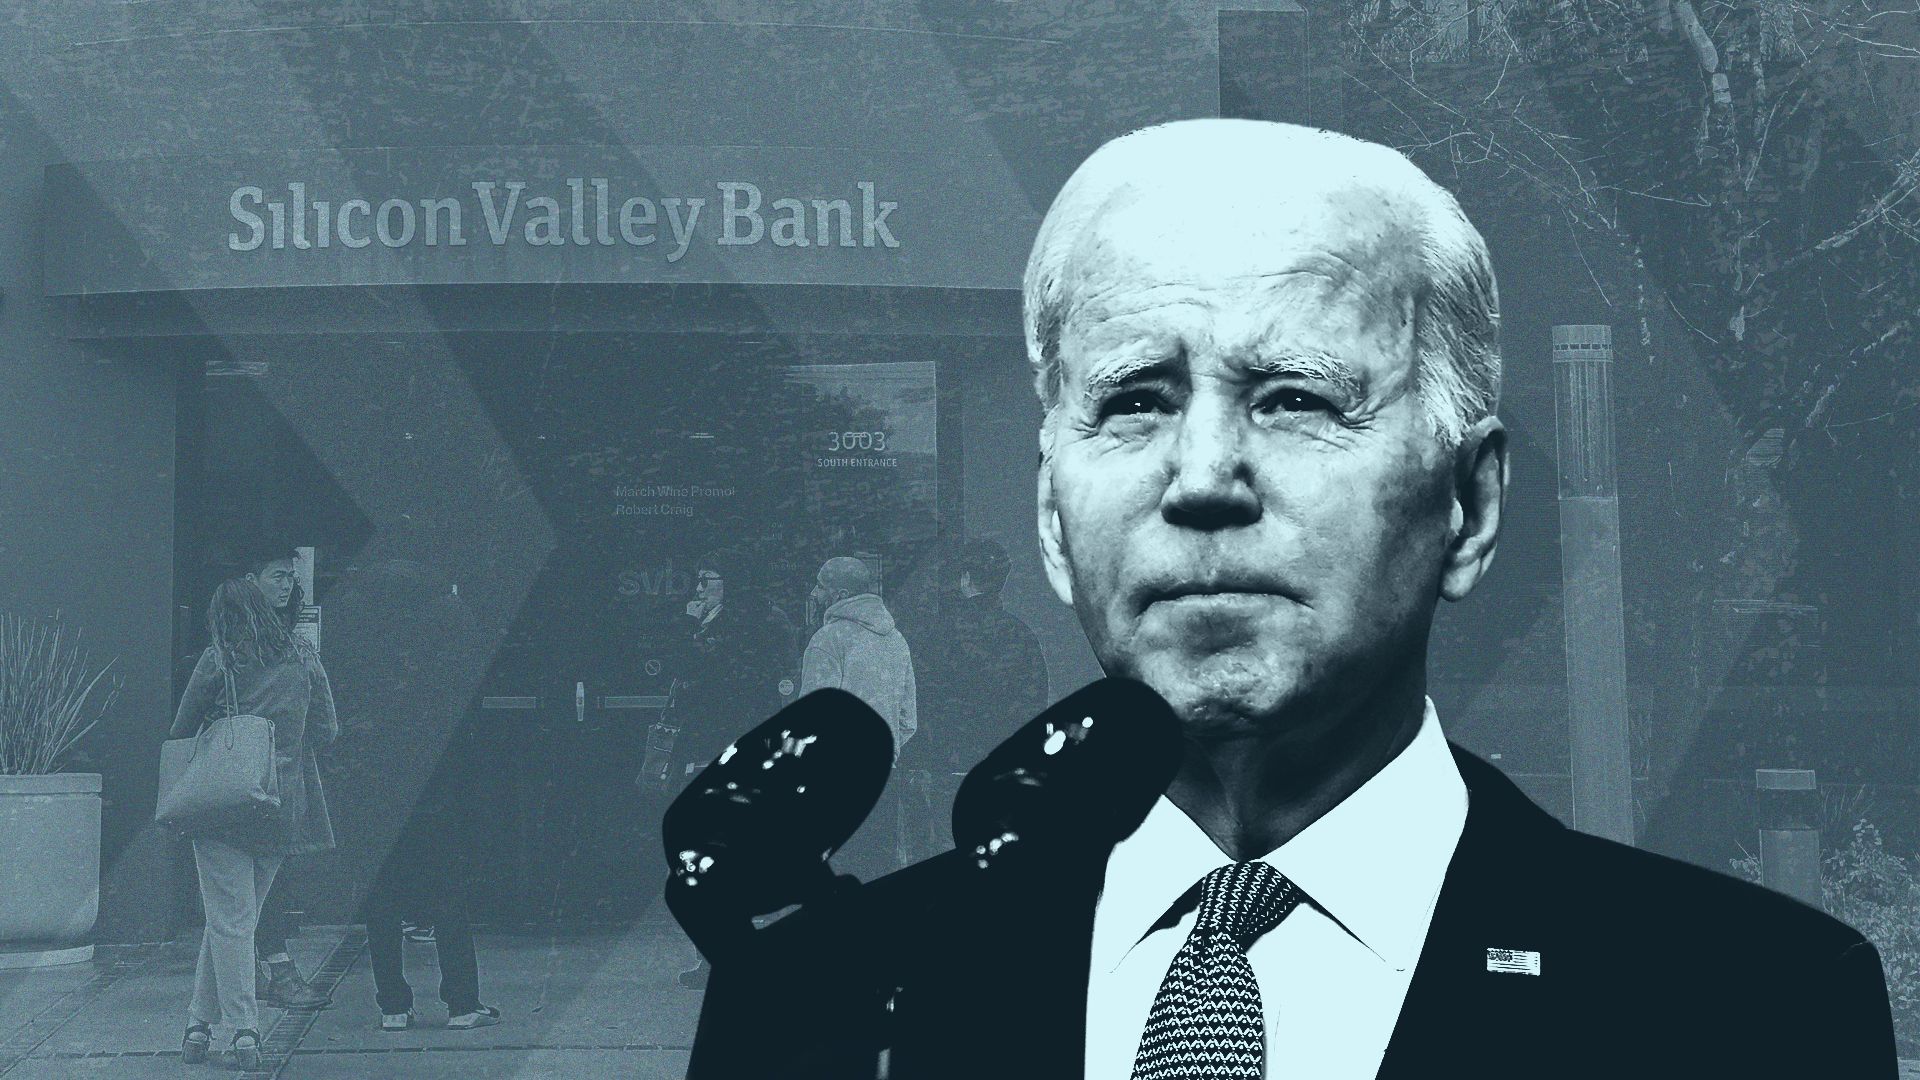 photo illustration of President Joe Biden and SVB bank logos and customers